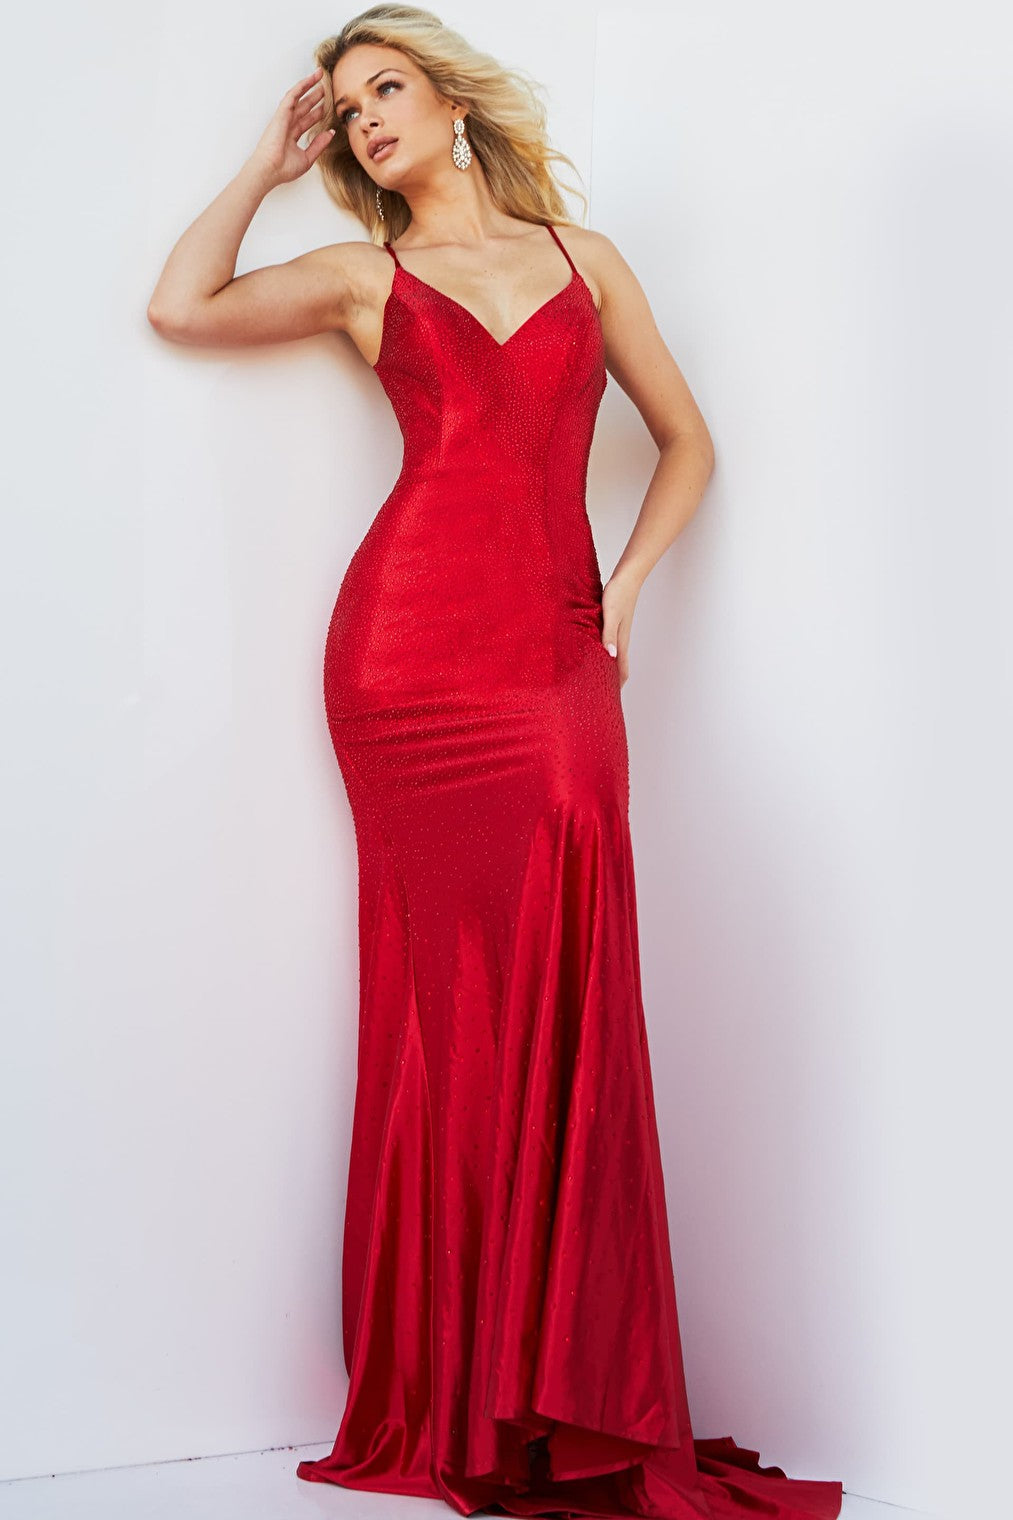 red beaded dress 08464